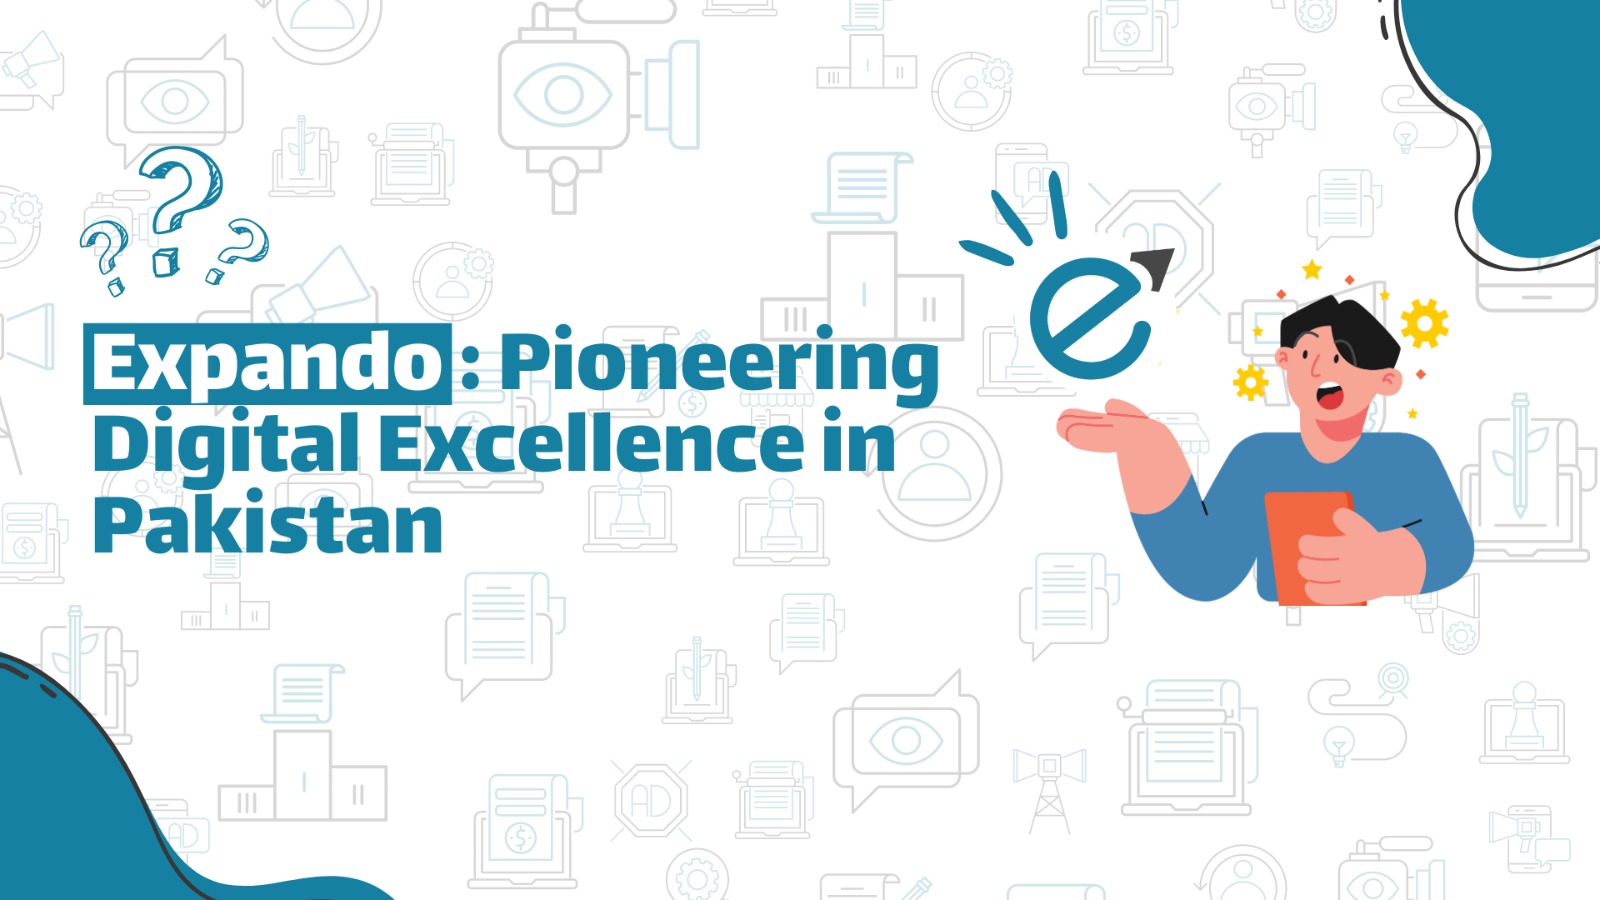 Expando: Pioneering Digital Excellence in Pakistan